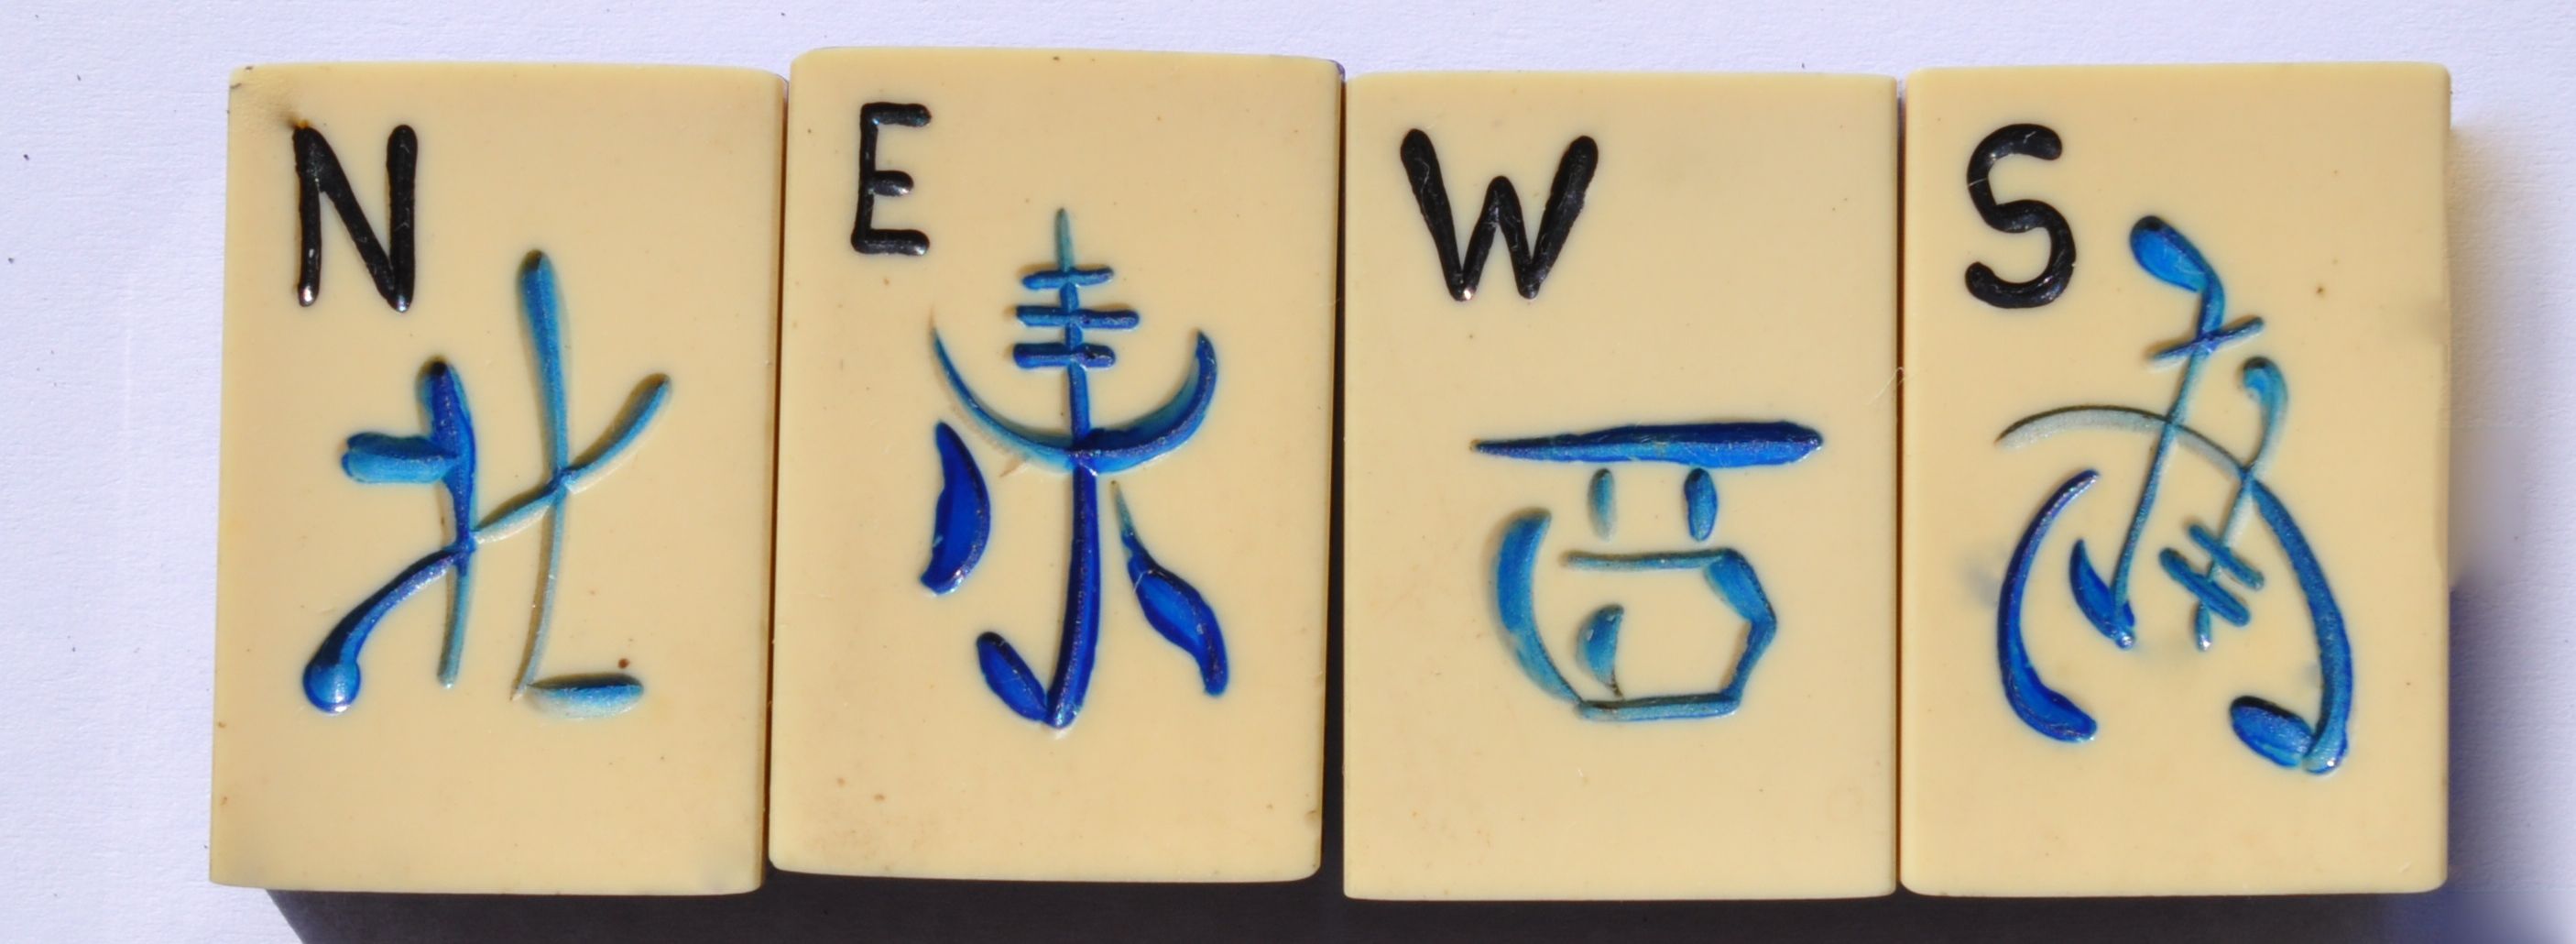 http://www.mahjongtreasures.com/wp-content/uploads/2014/03/DSC_0703winds.jpg